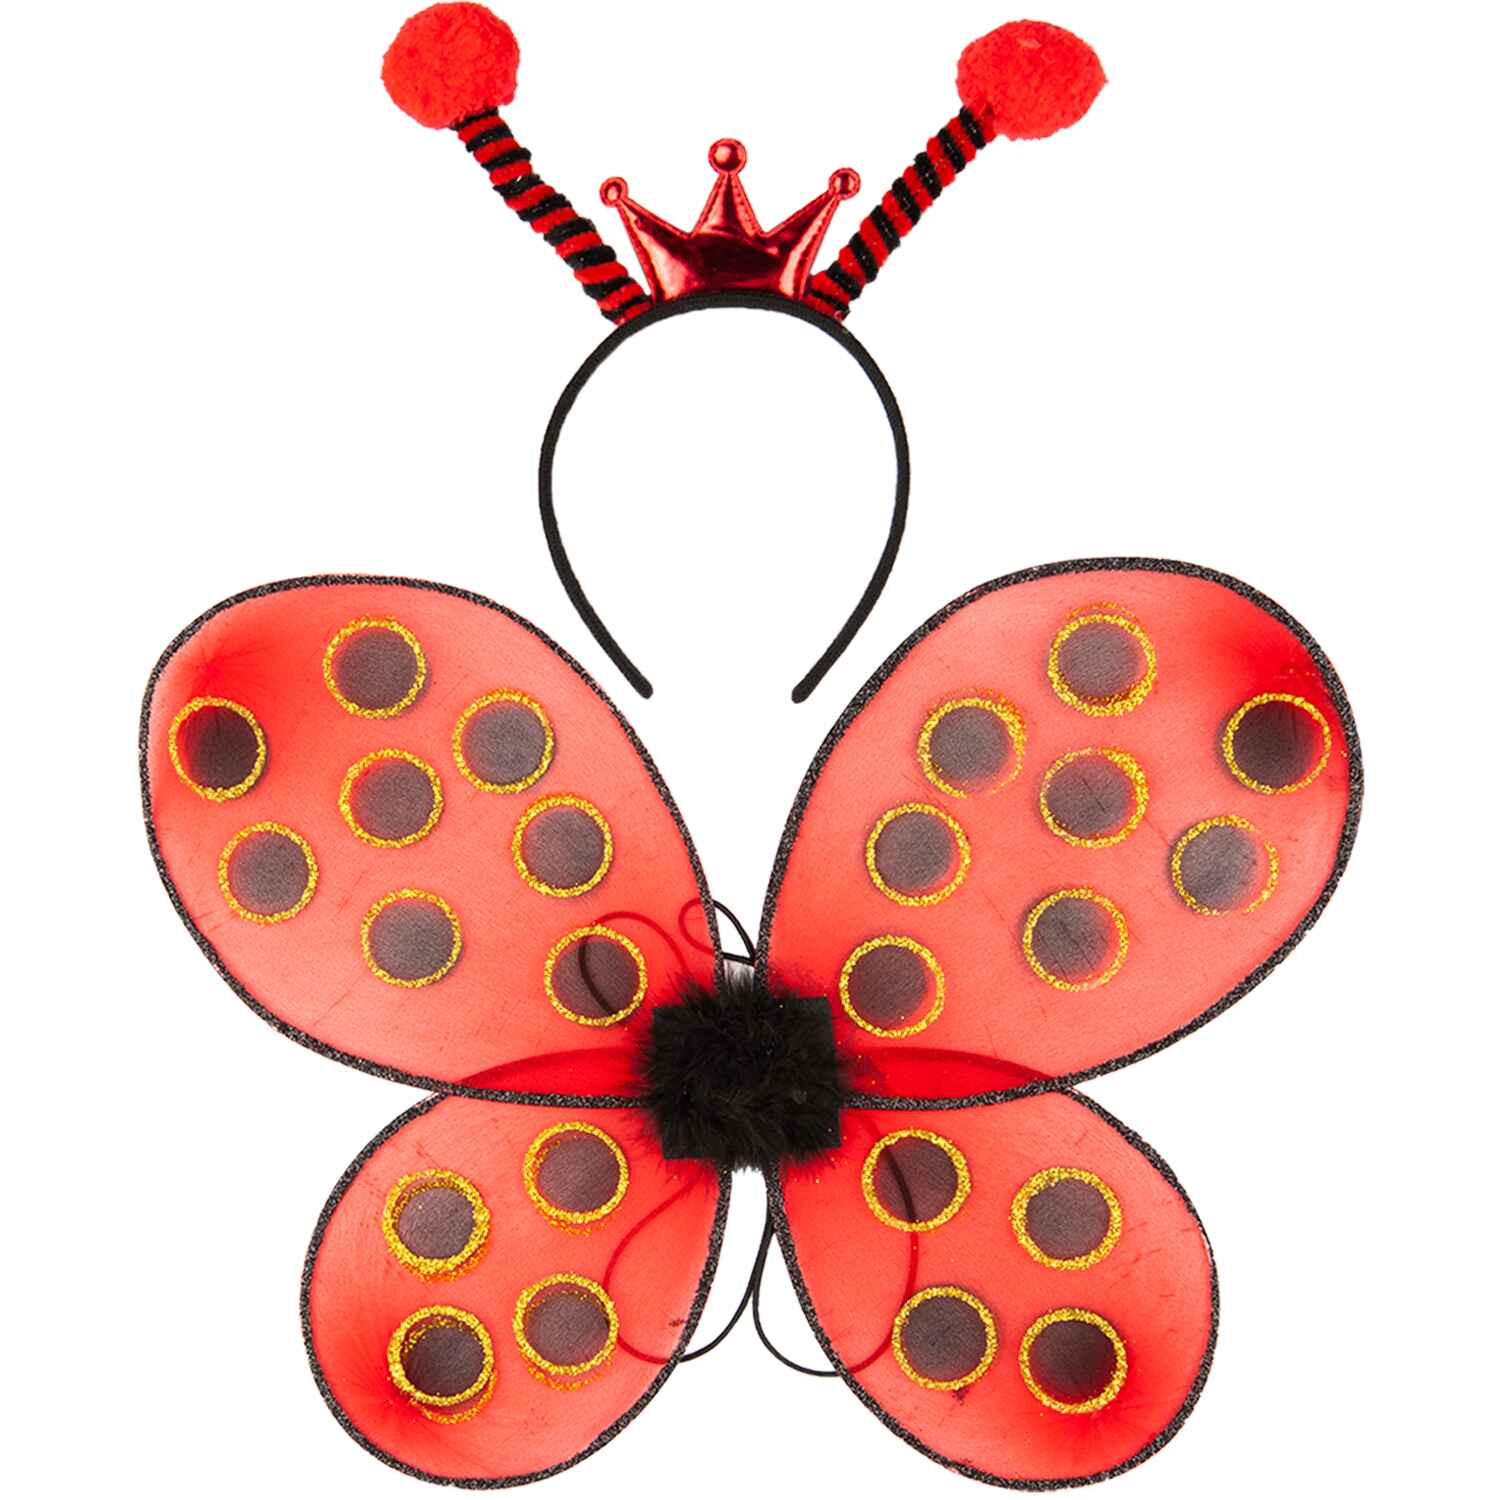 ladybug tights women ladbug attena disfras caperucita roja antenas de abeja ladybug exterminator